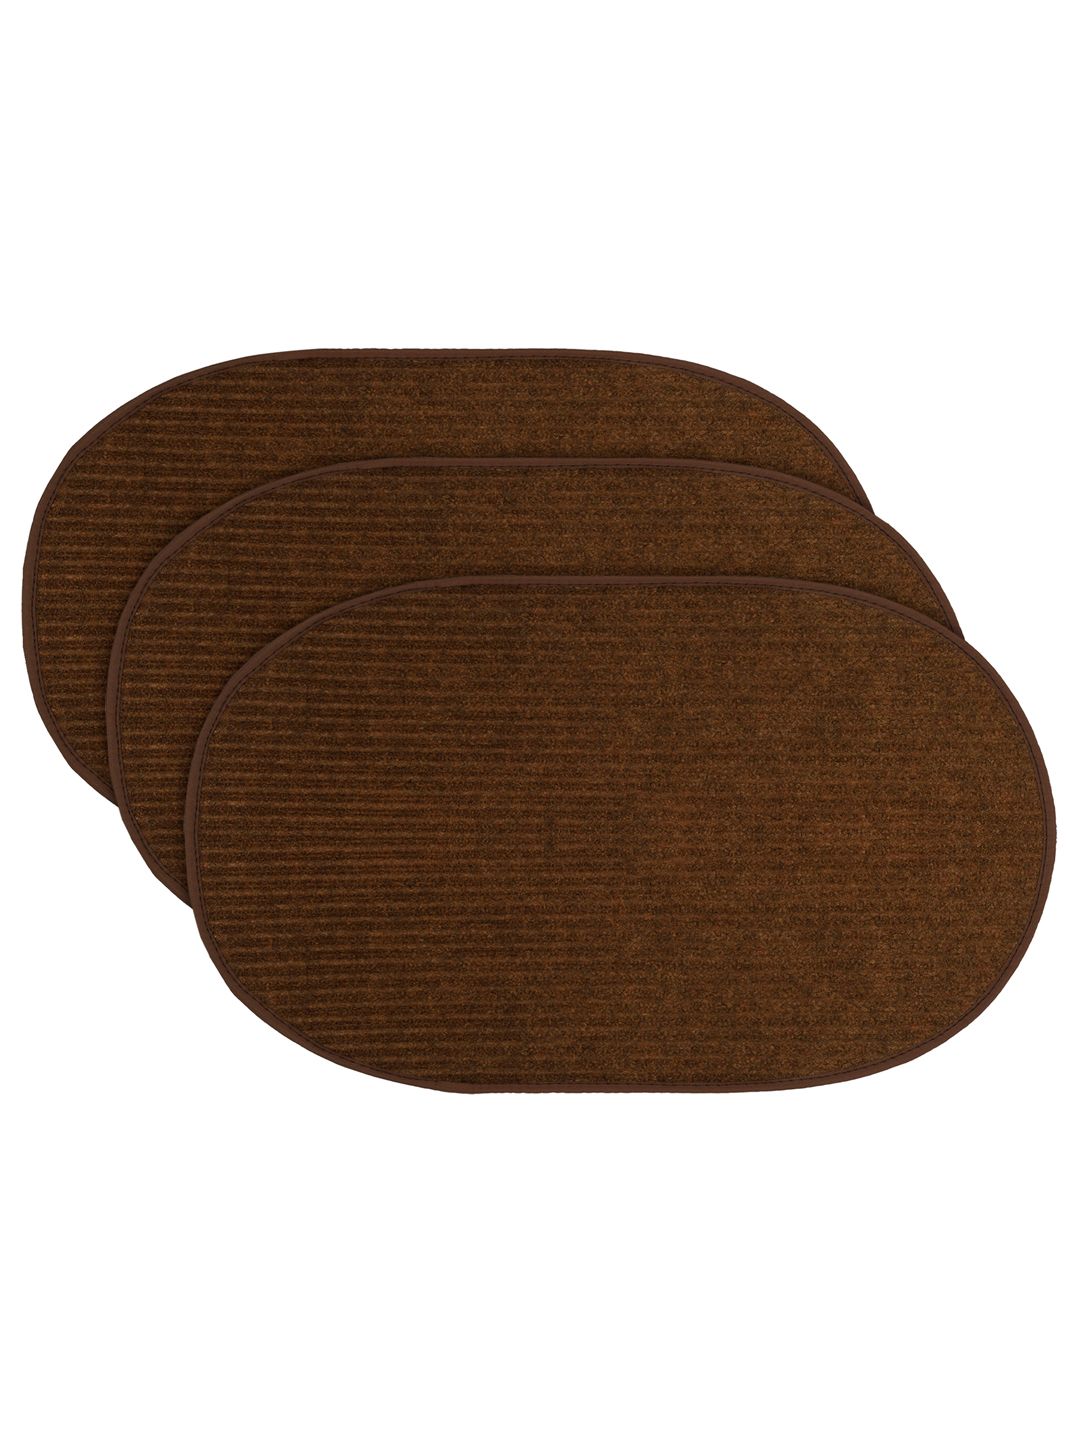 Kuber Industries Set Of 3 Brown Solid Oval Anti-Skid Doormats Price in India